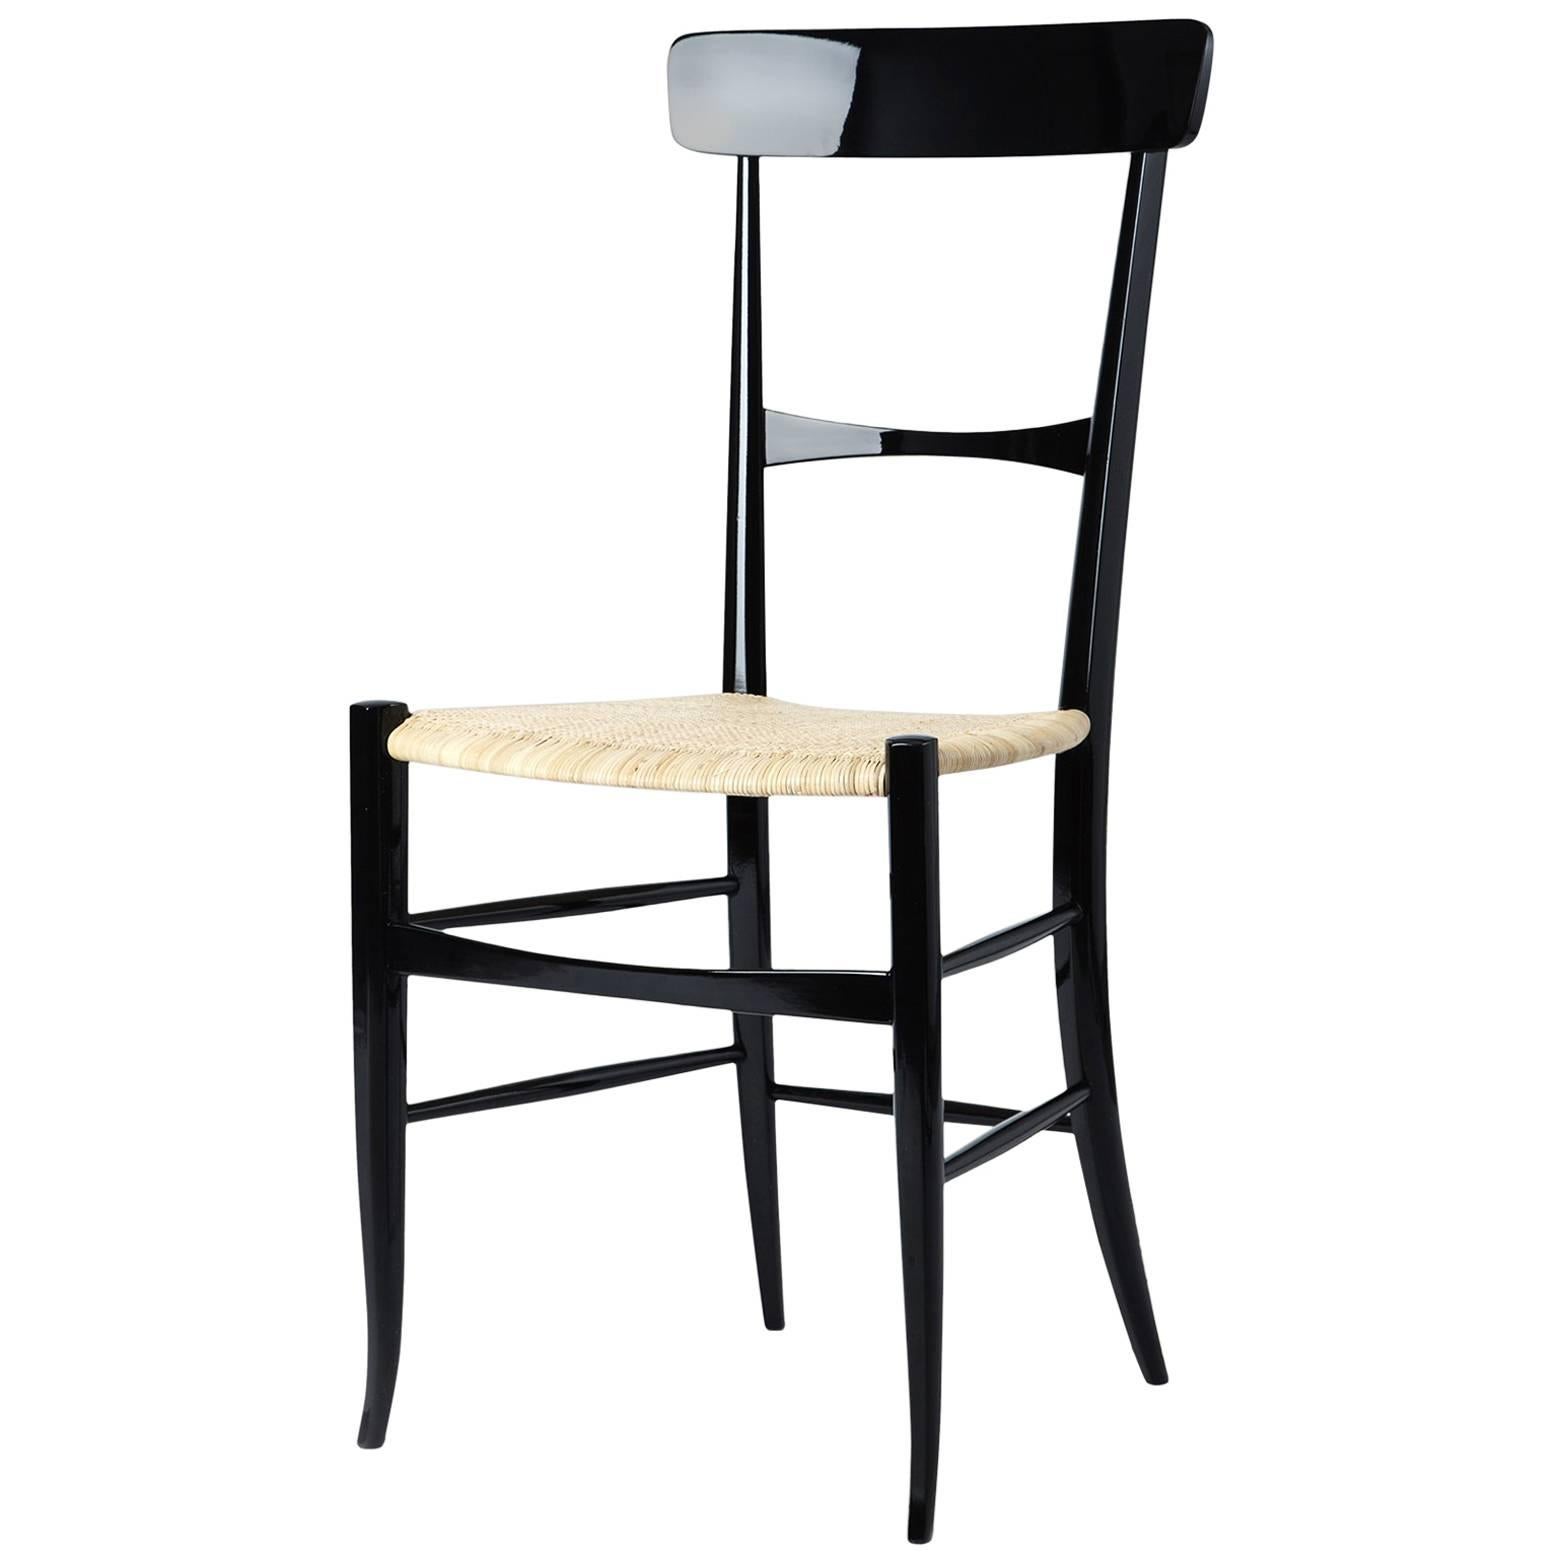 Eligo "Leggerissima" Black Chair For Sale